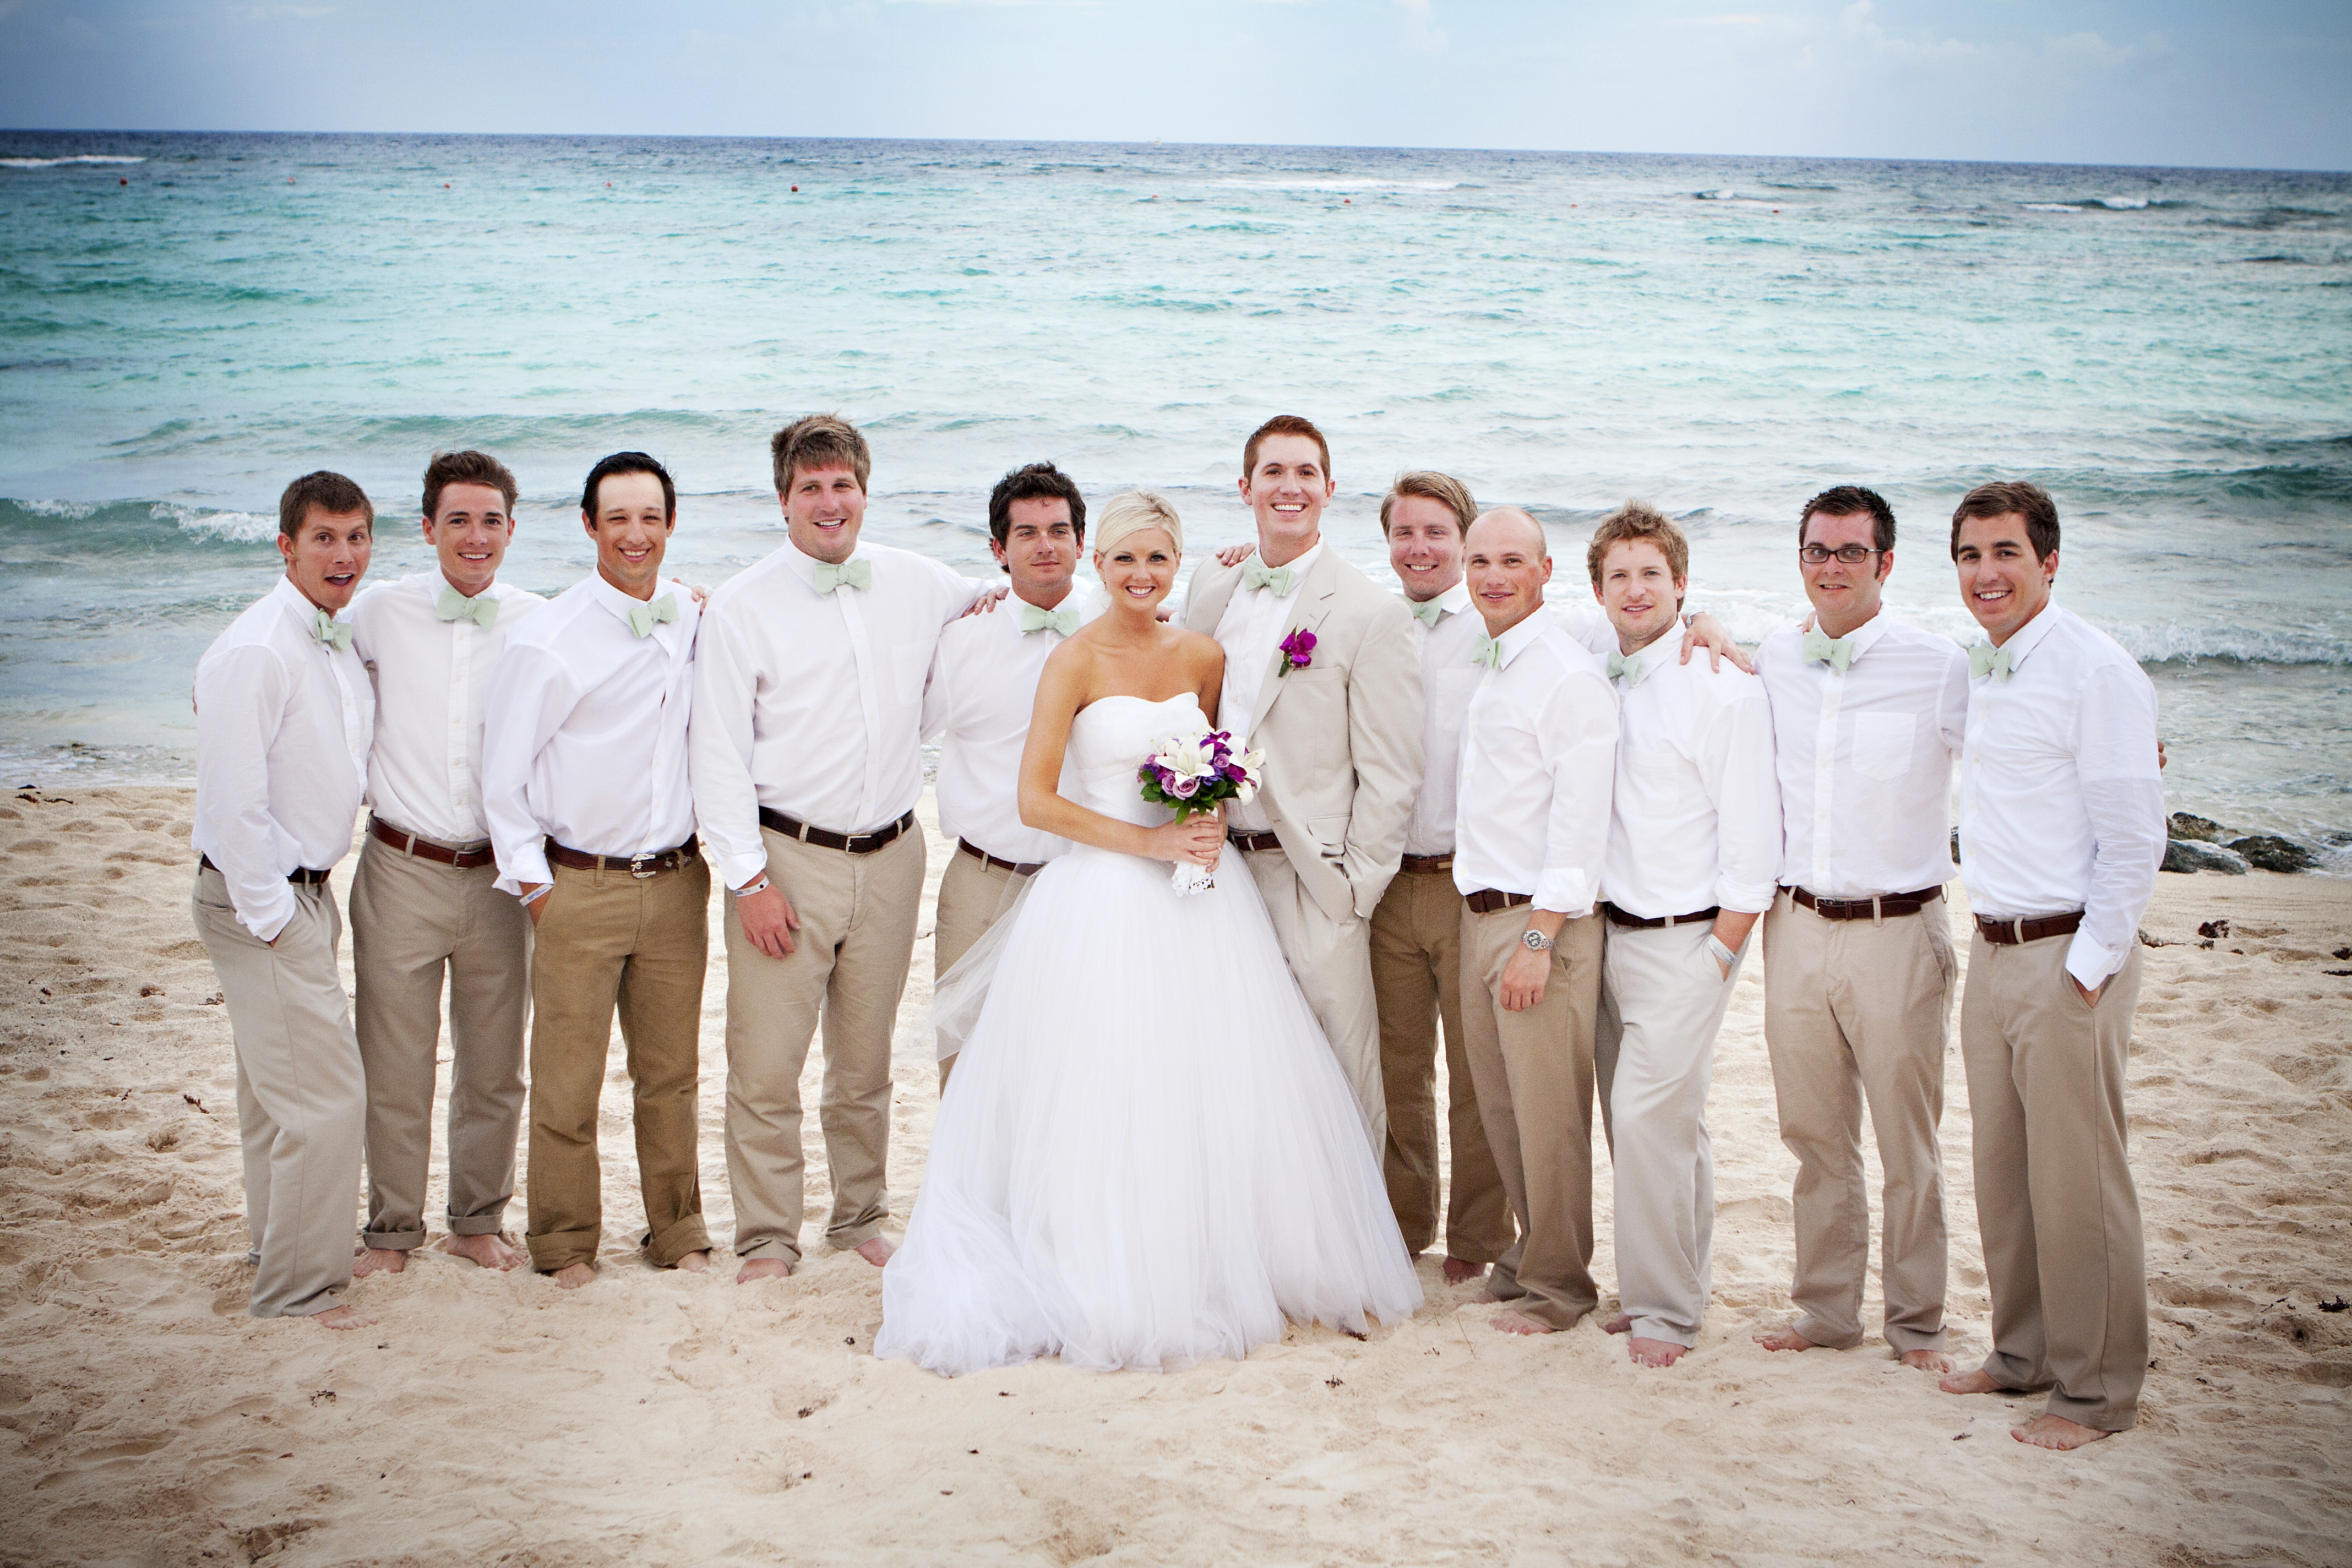 strapless simple beach wedding dresses strapless wedding dresses, strapless beach wedding dresses, simple 